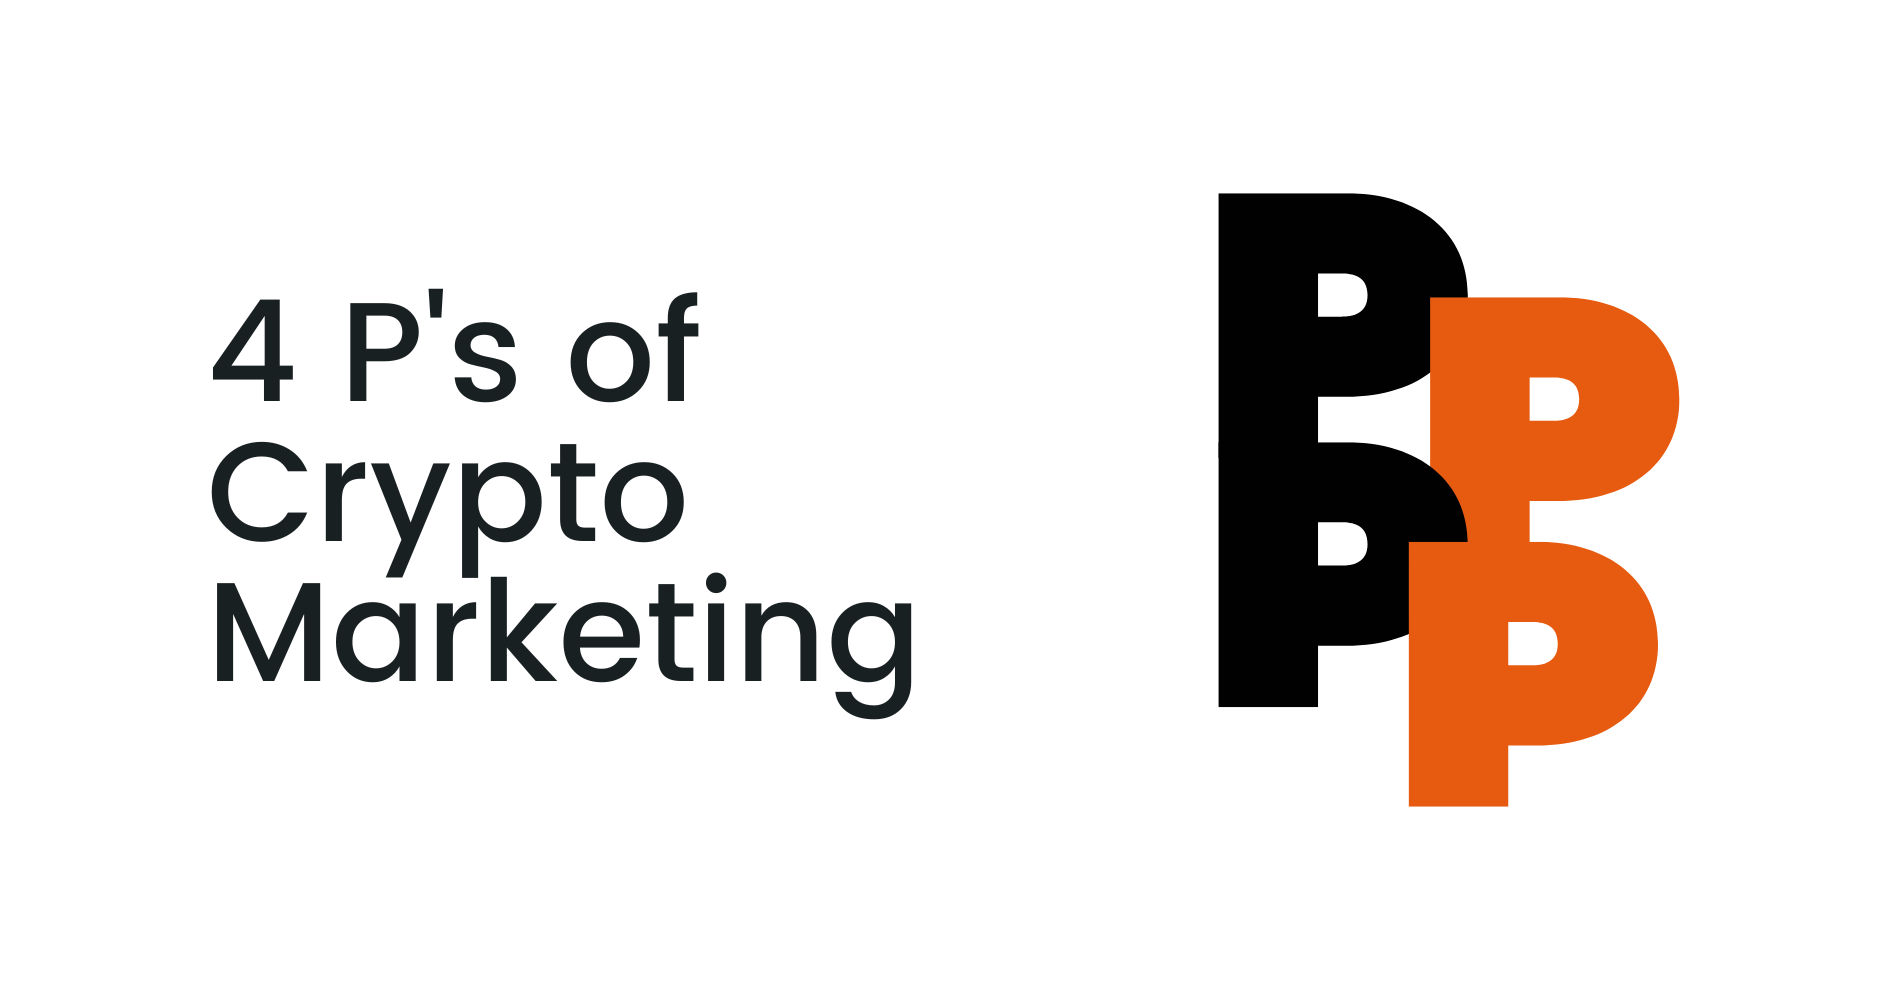 4 P's of Crypto Marketing